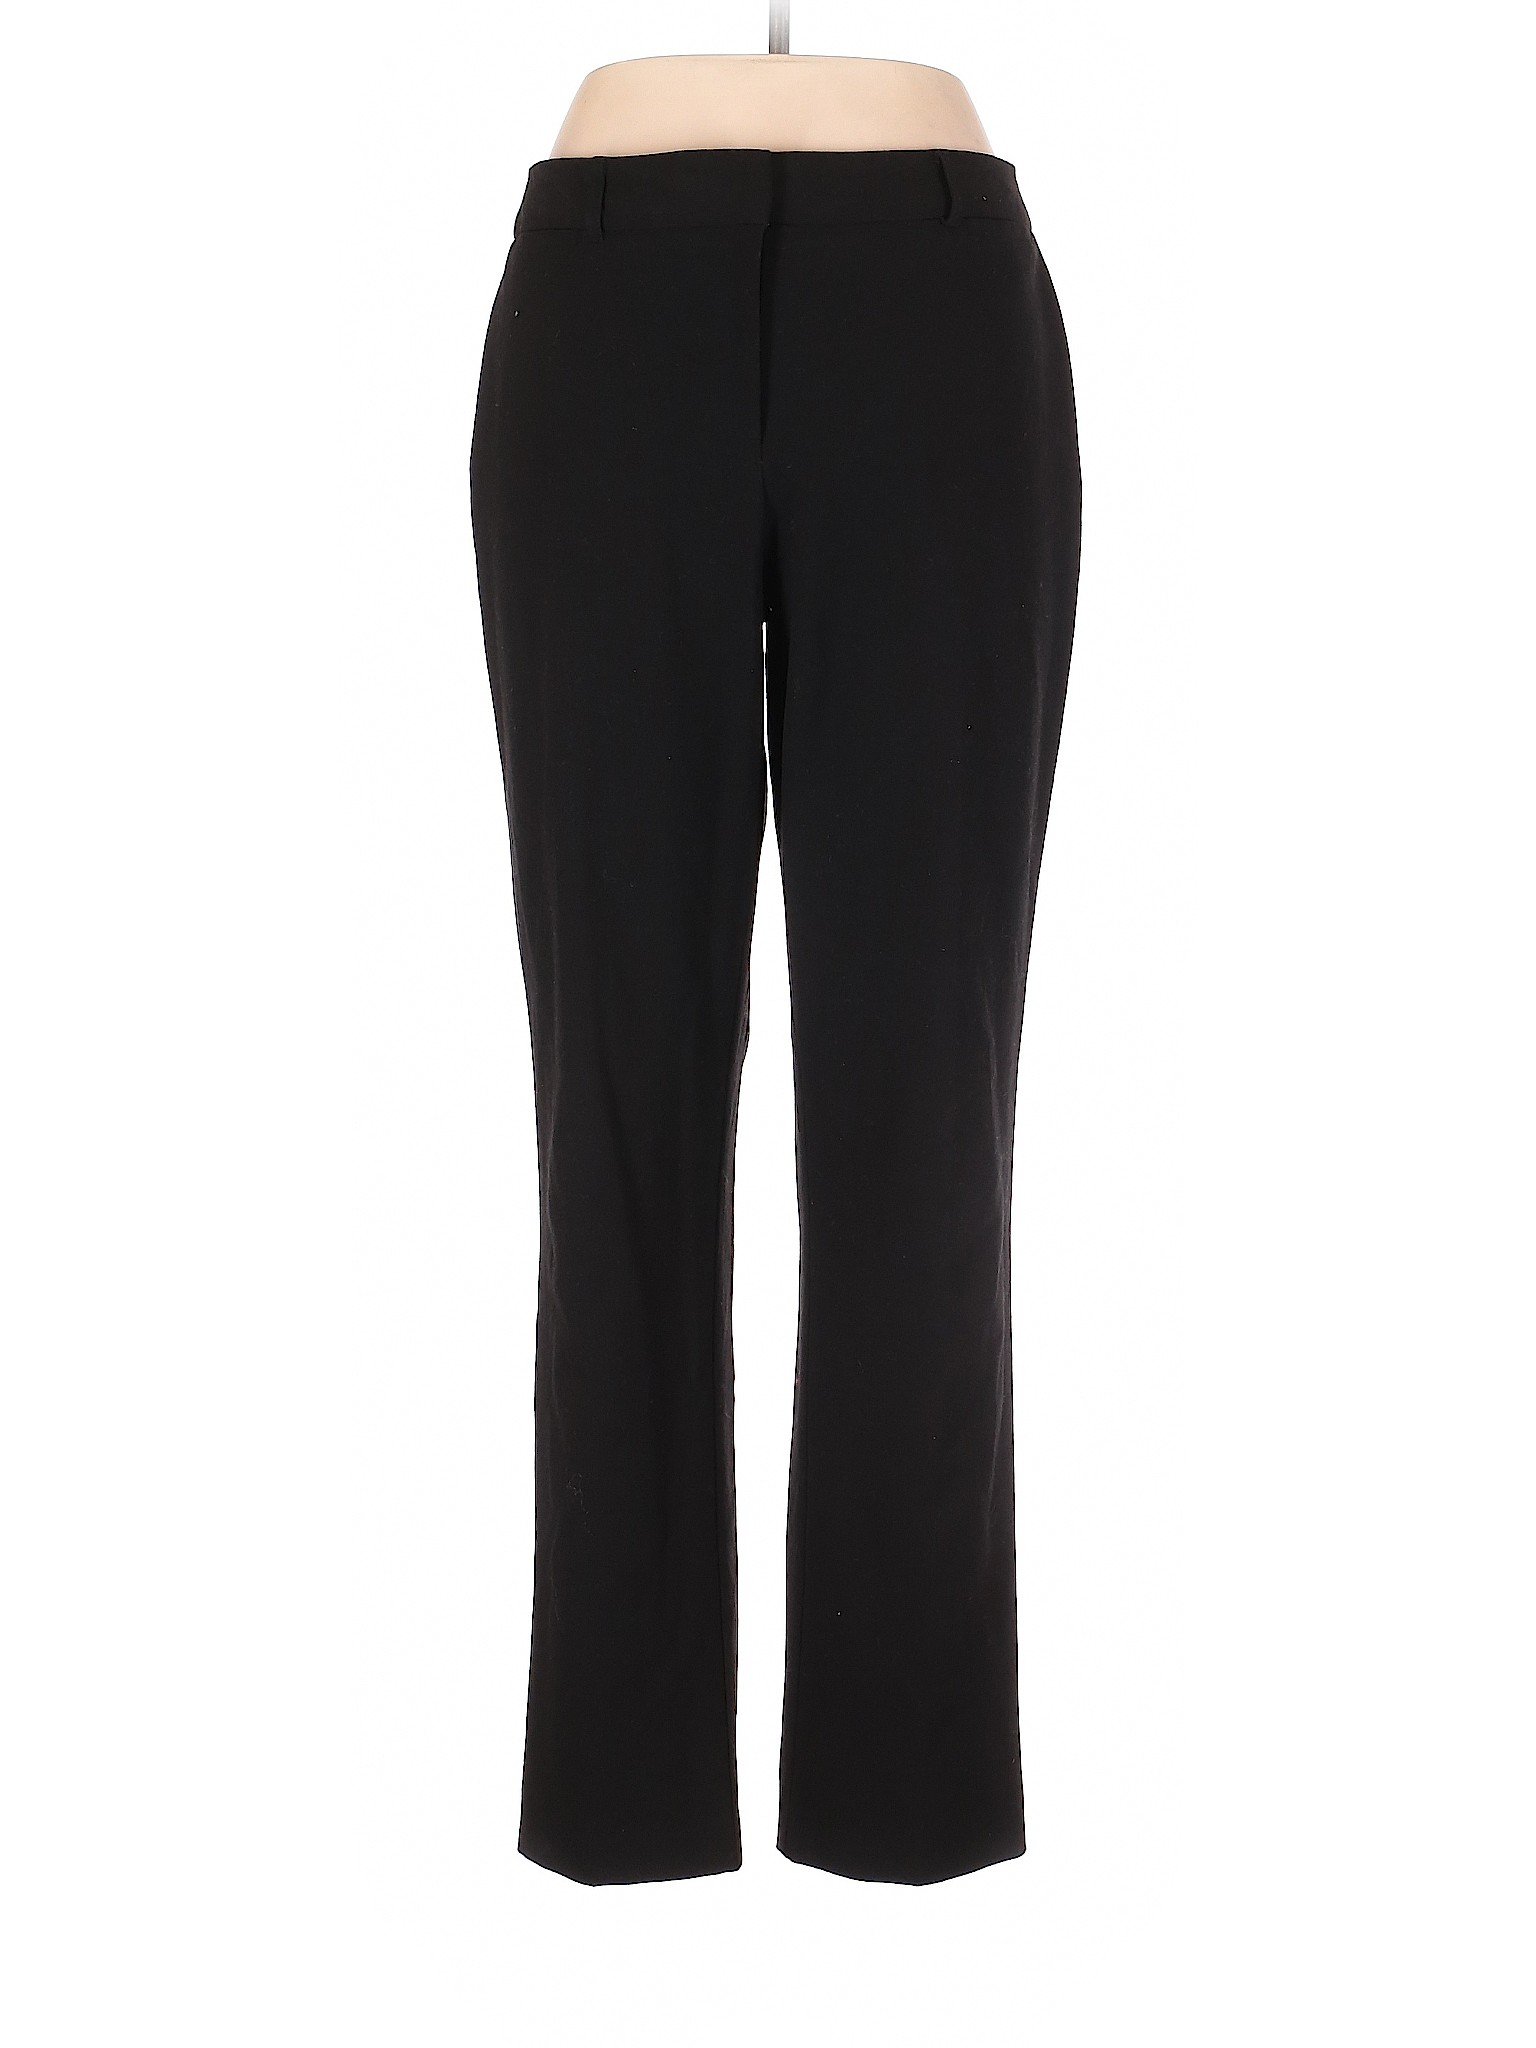 Style&Co Women Black Dress Pants 8 | eBay